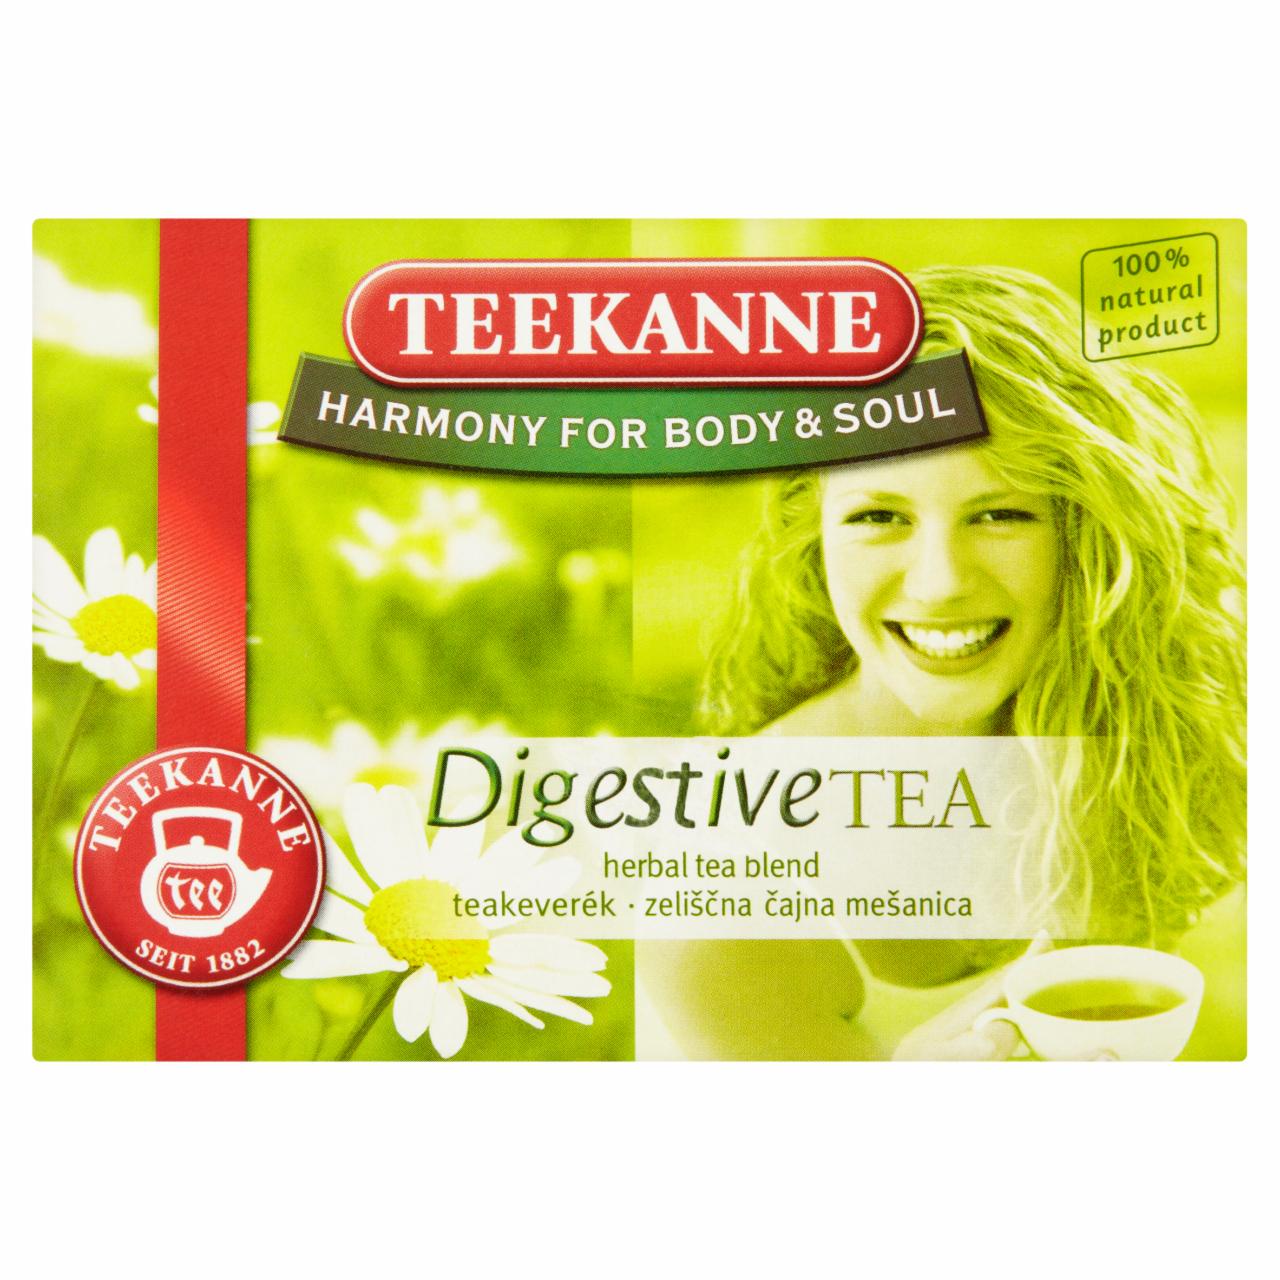 Képek - Teekanne Harmony for Body & Soul Digestive Tea teakeverék 16 teatasak 28,8 g